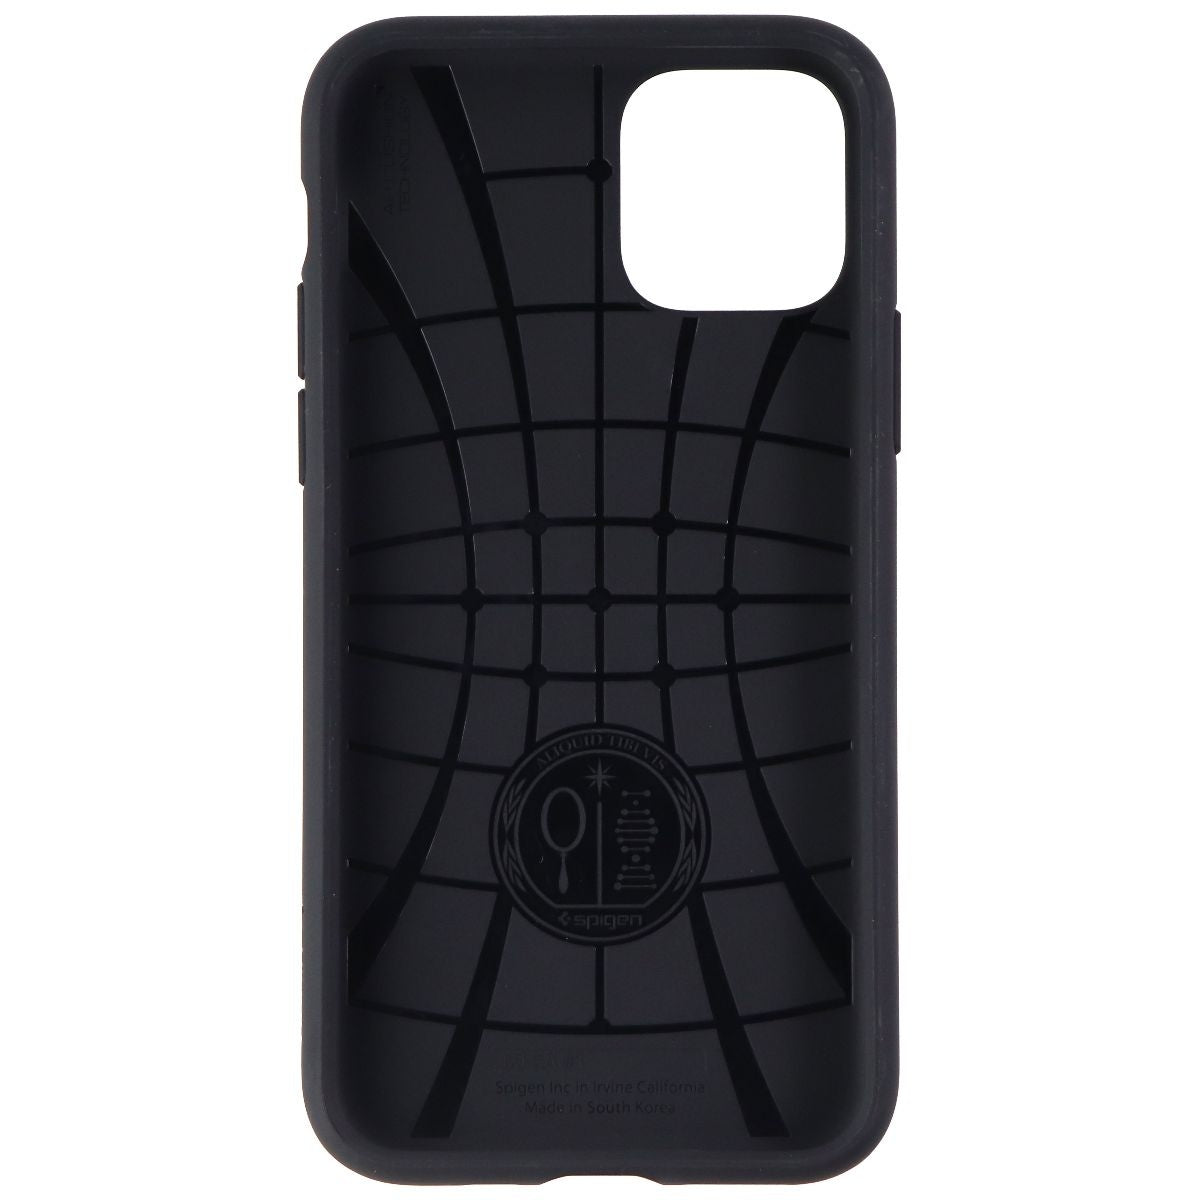 Spigen Core Armor Series Flexible Case for Apple iPhone 11 Pro - Black Cell Phone - Cases, Covers & Skins Spigen    - Simple Cell Bulk Wholesale Pricing - USA Seller